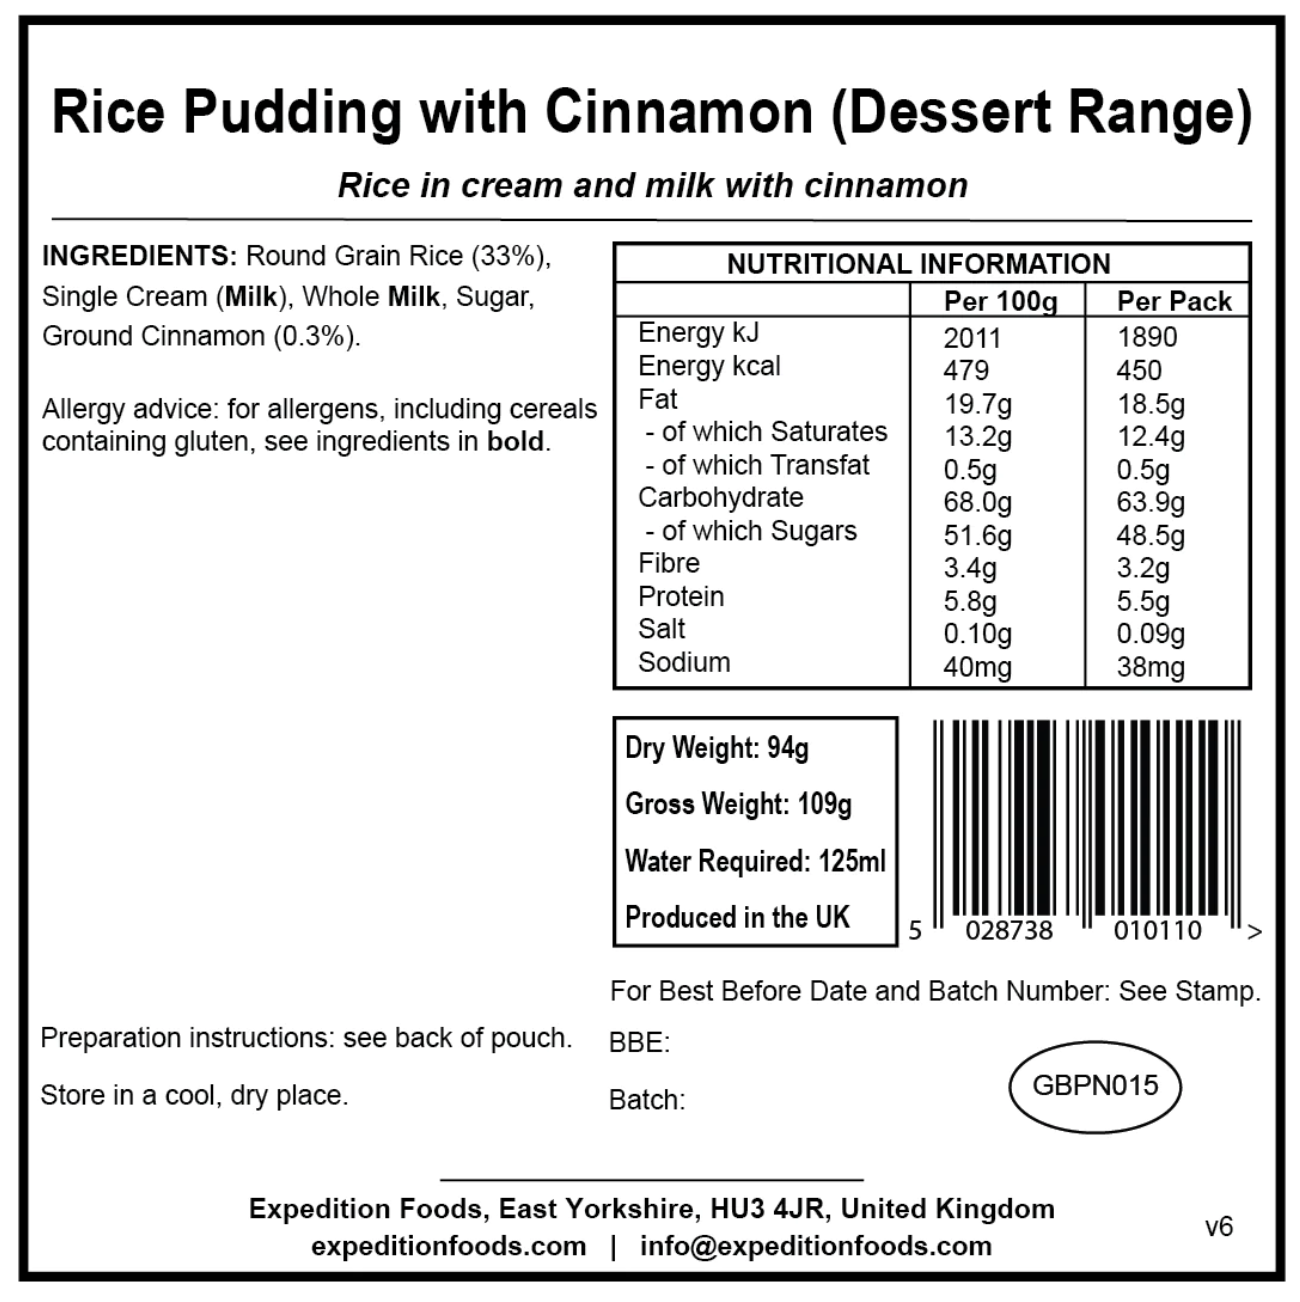 Rice Pudding with Cinnamon